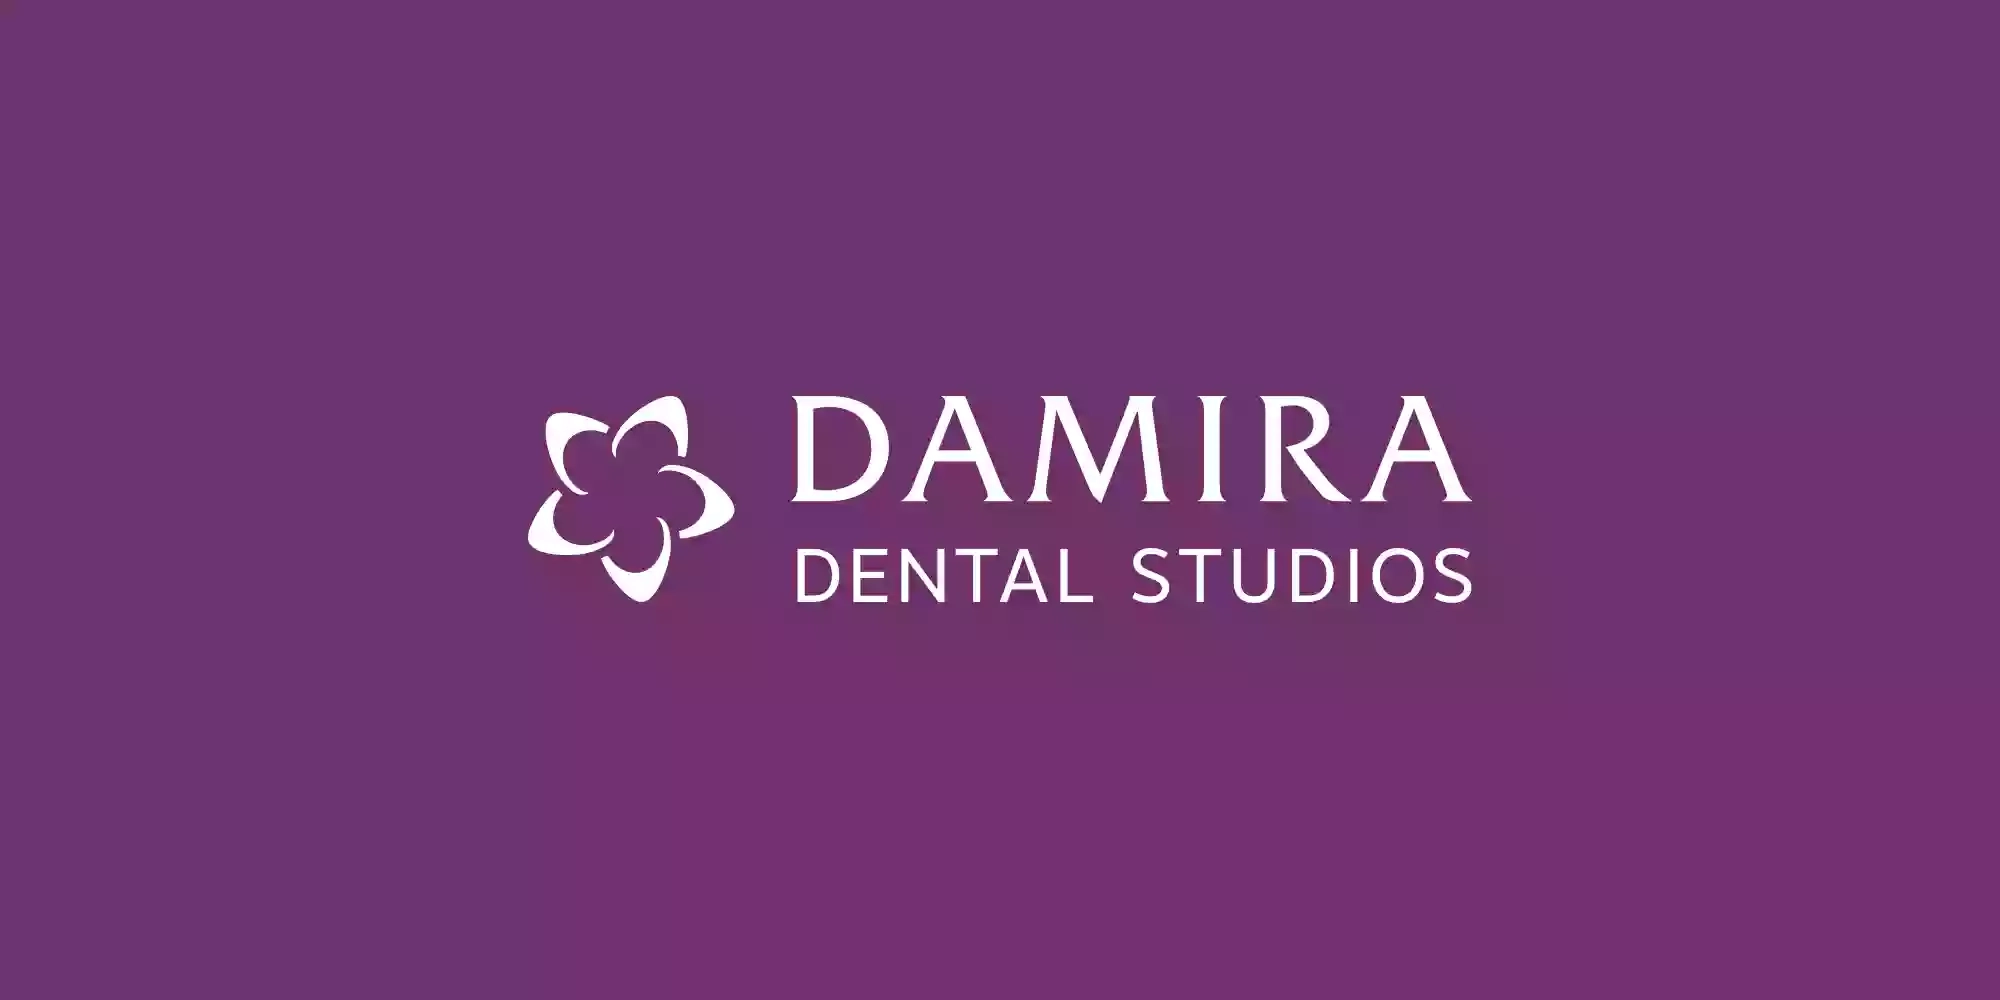 Damira Eclipse Dental Practice